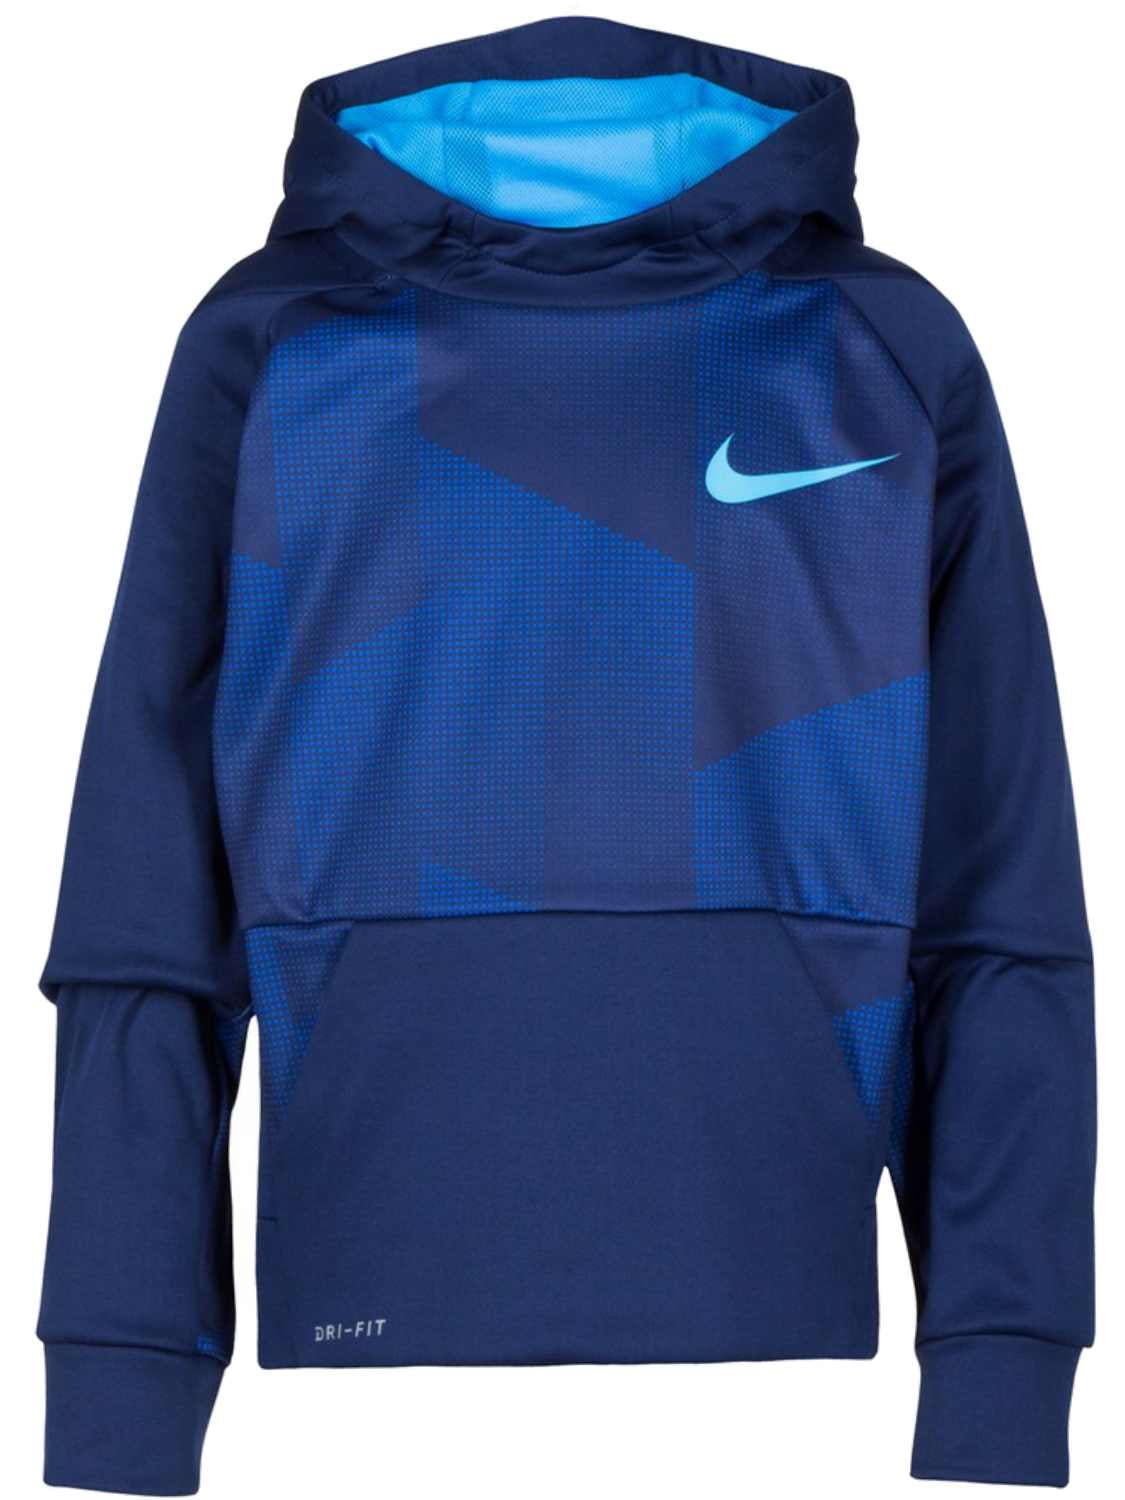 Nike Therma Dri-Fit Boys Blue Check Swoosh Hoodie Sweatshirt Jacket S (5)